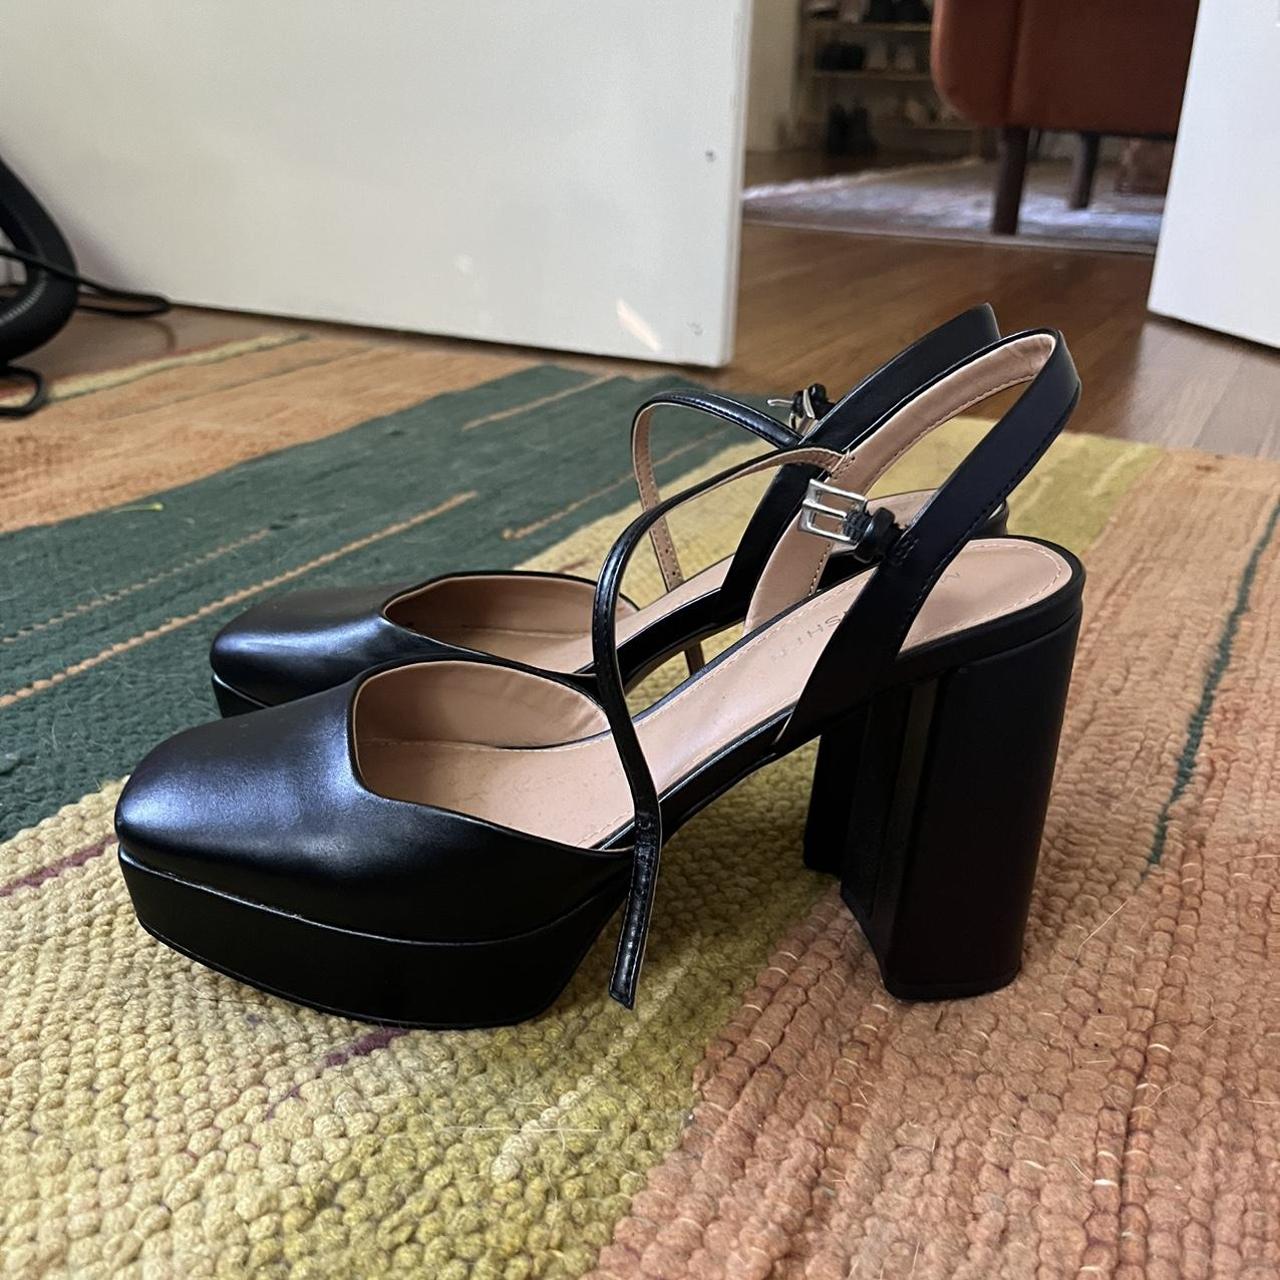 Square toe black leather block heels - Depop